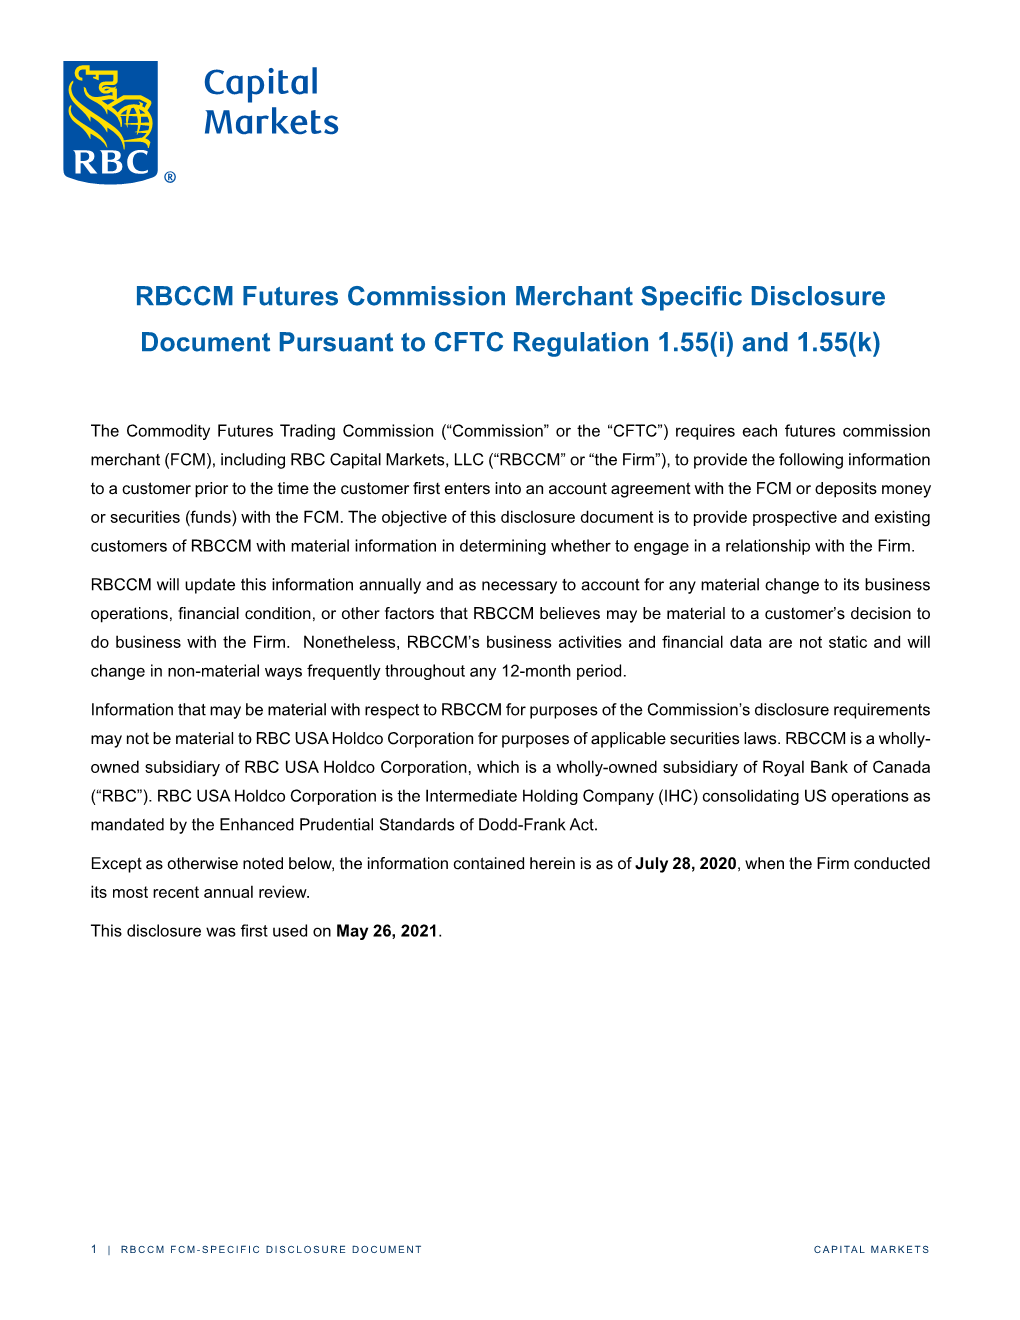 RBCCM FCM-Specific Disclosure Document